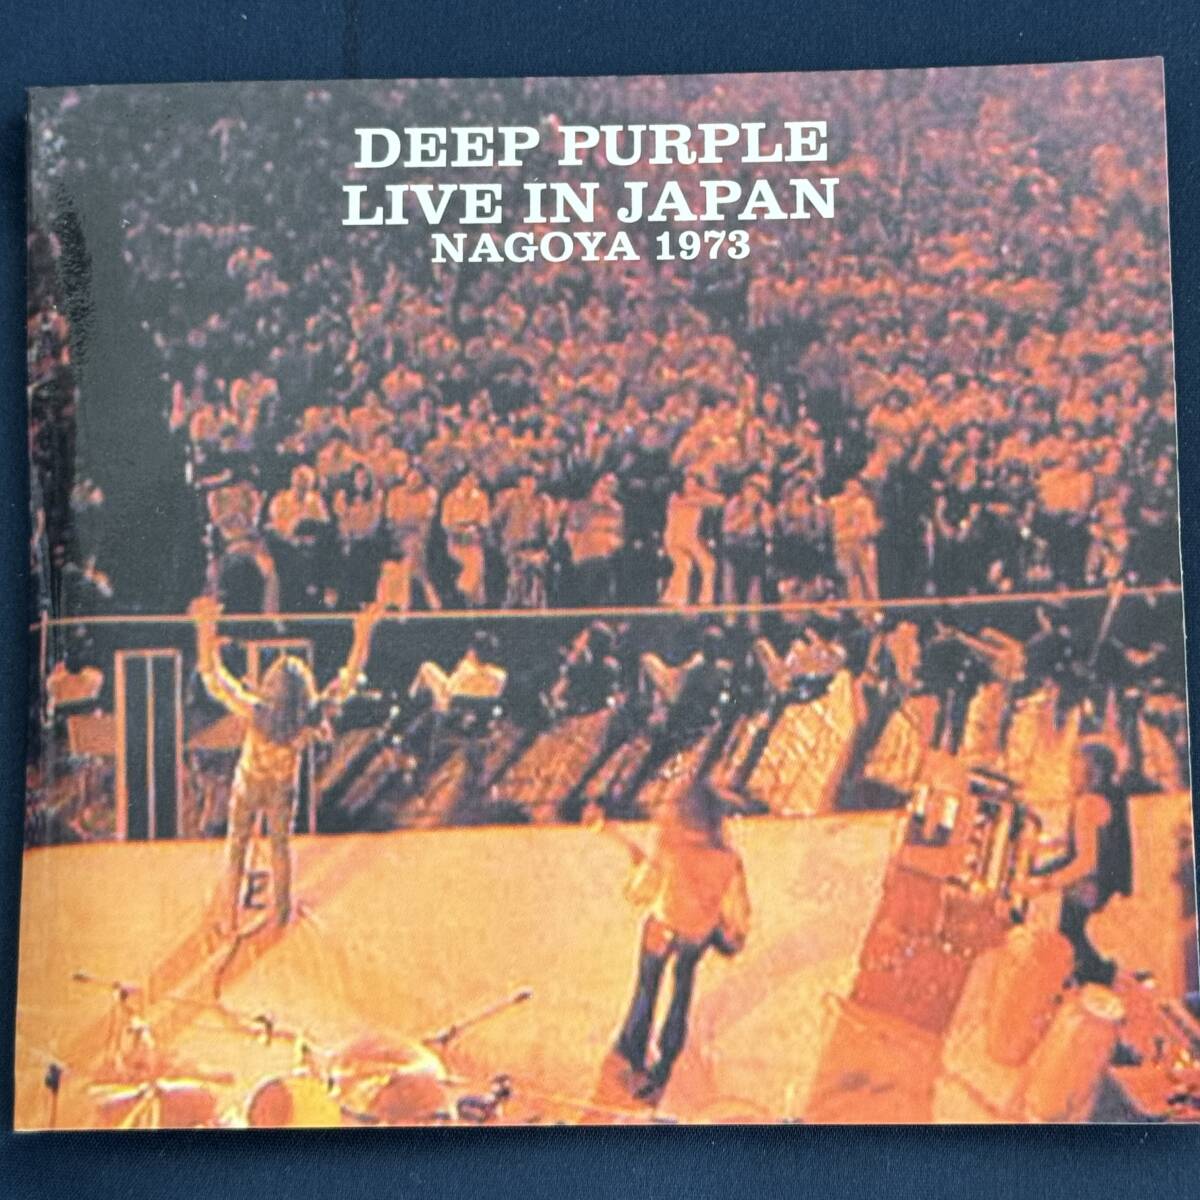 [CD] DEEP PURPLE /LIVE IN JAPAN NAGOYA 1973 Ritchie Blackmore Ian Gillan ROCK